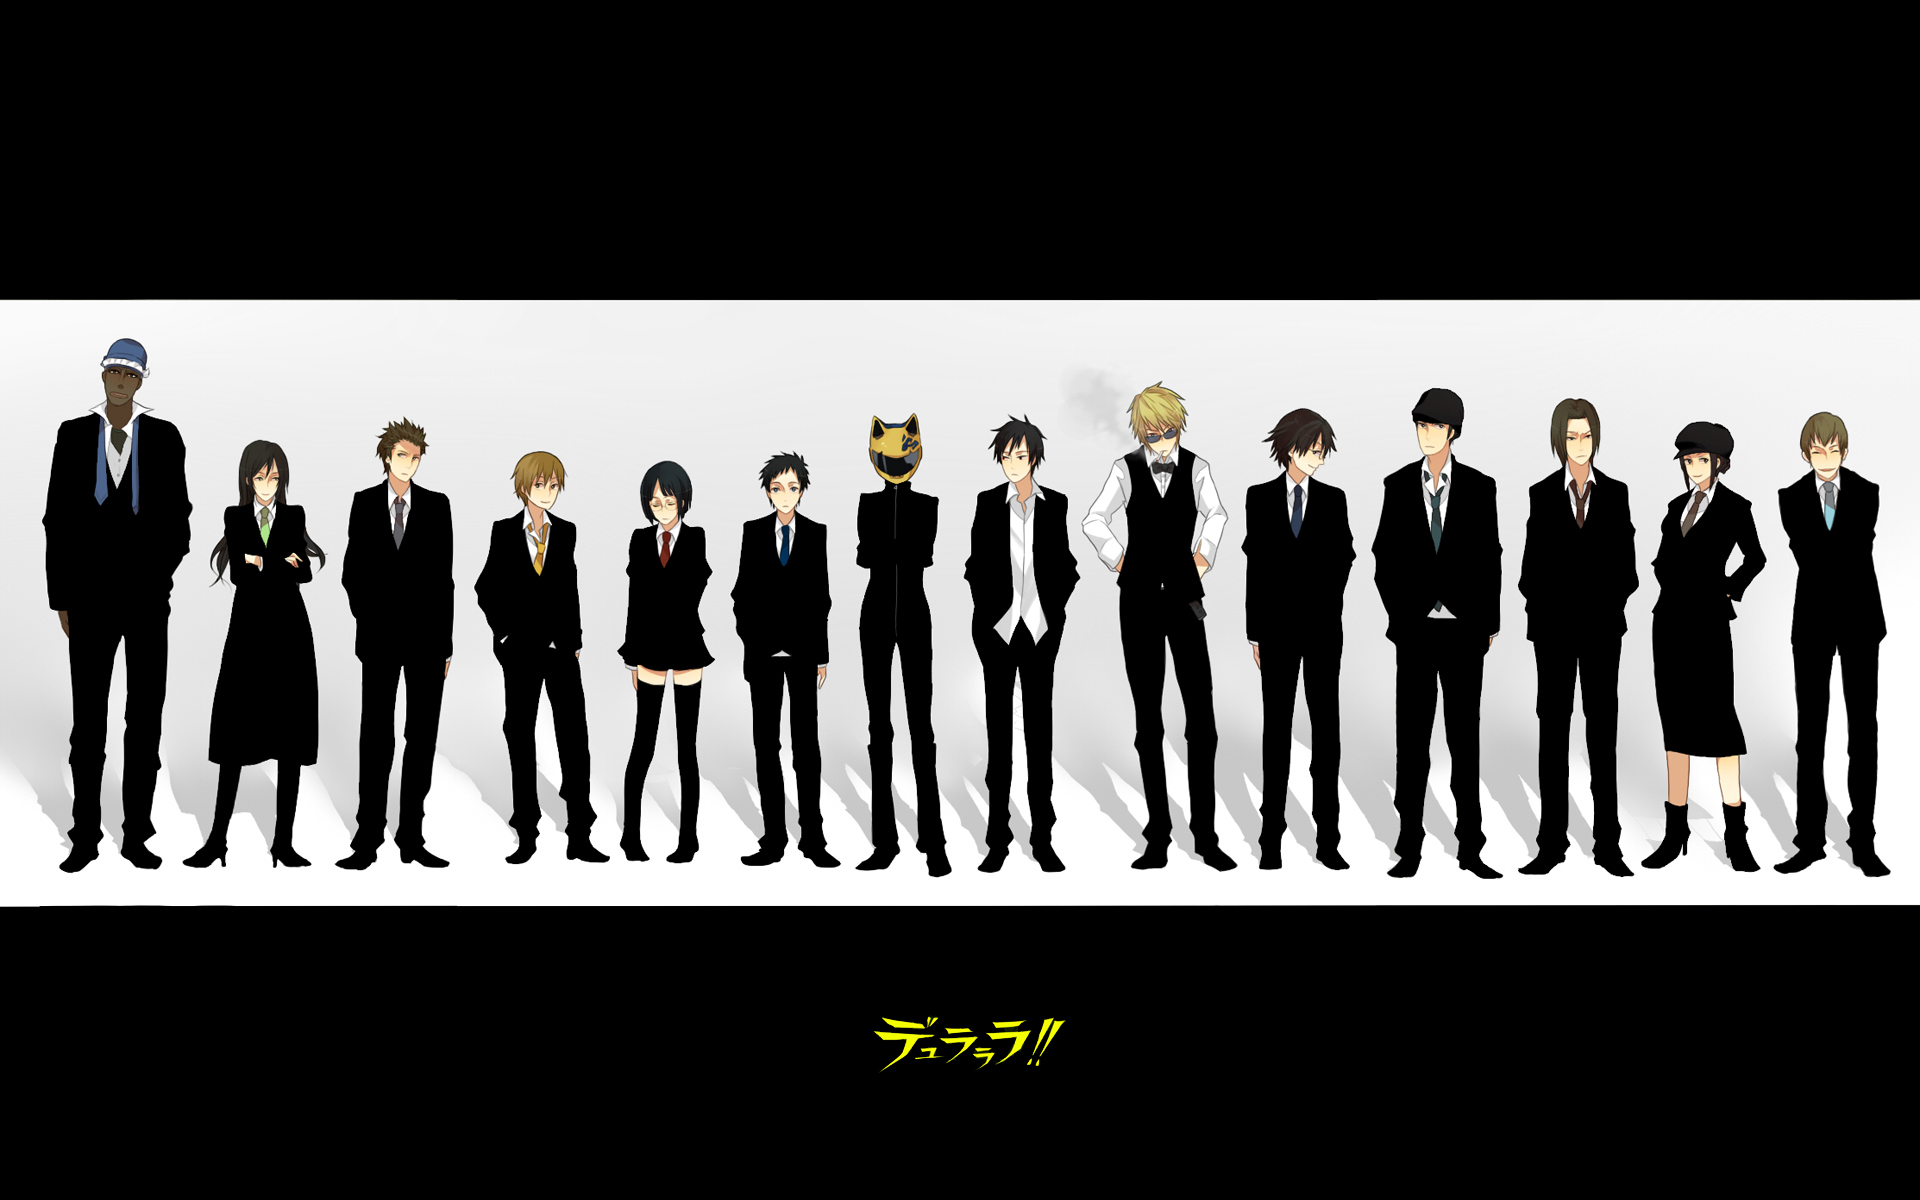 Durarara!! anime characters on a vibrant desktop wallpaper.